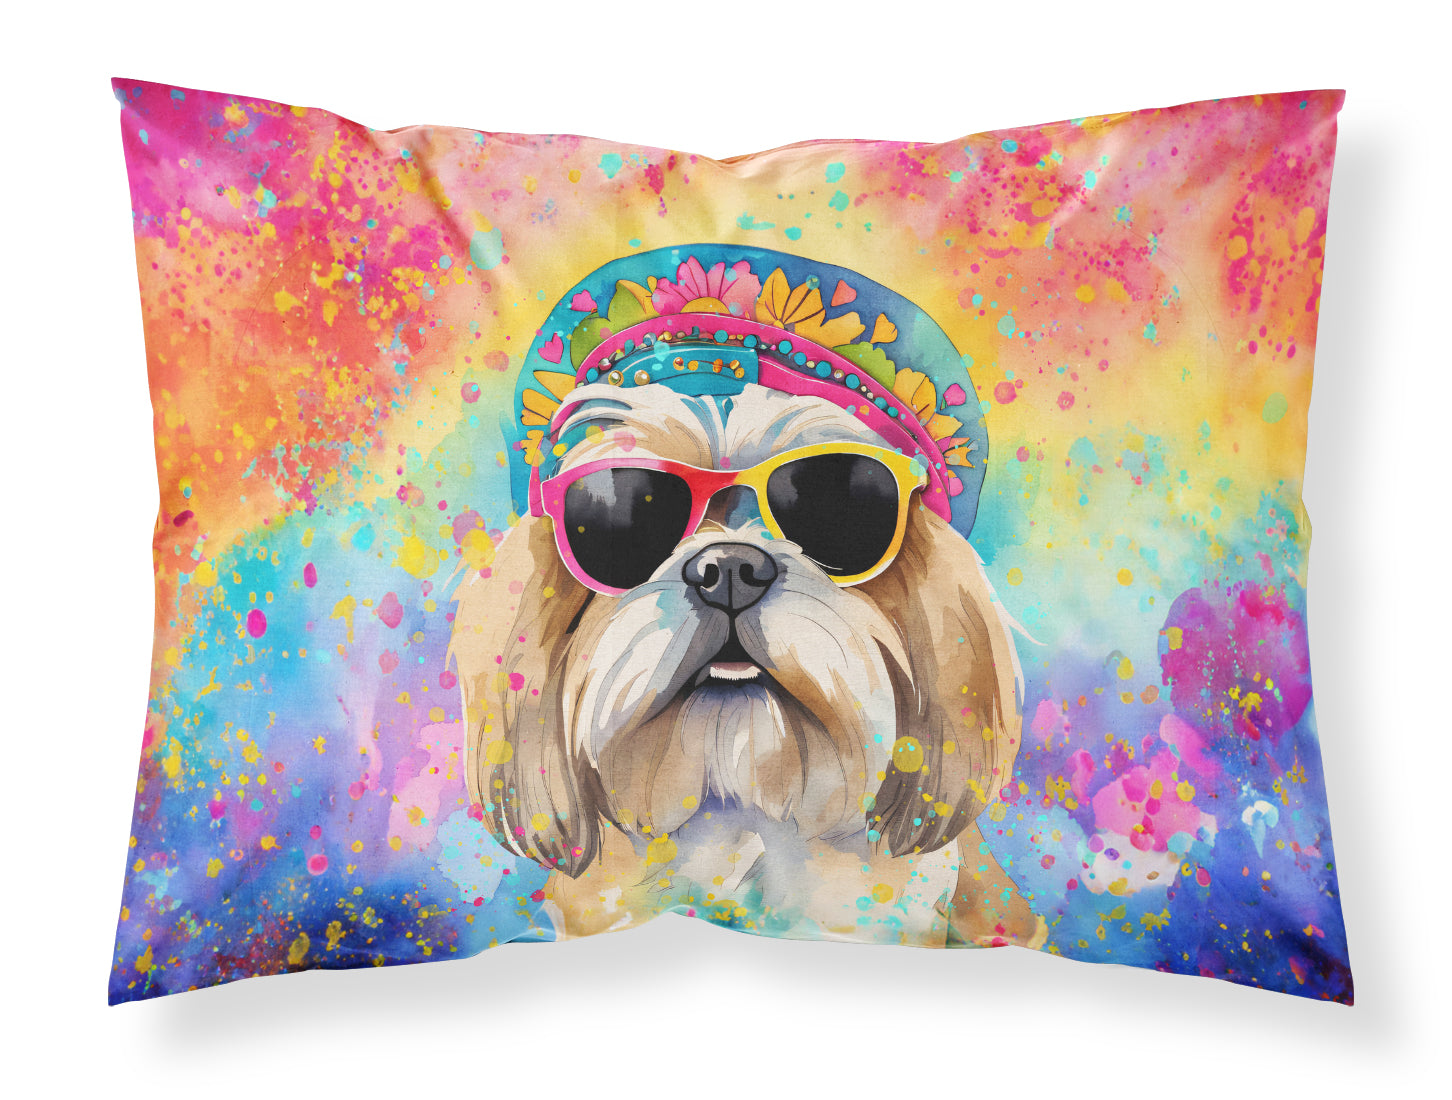 Buy this Shih Tzu Hippie Dawg Standard Pillowcase